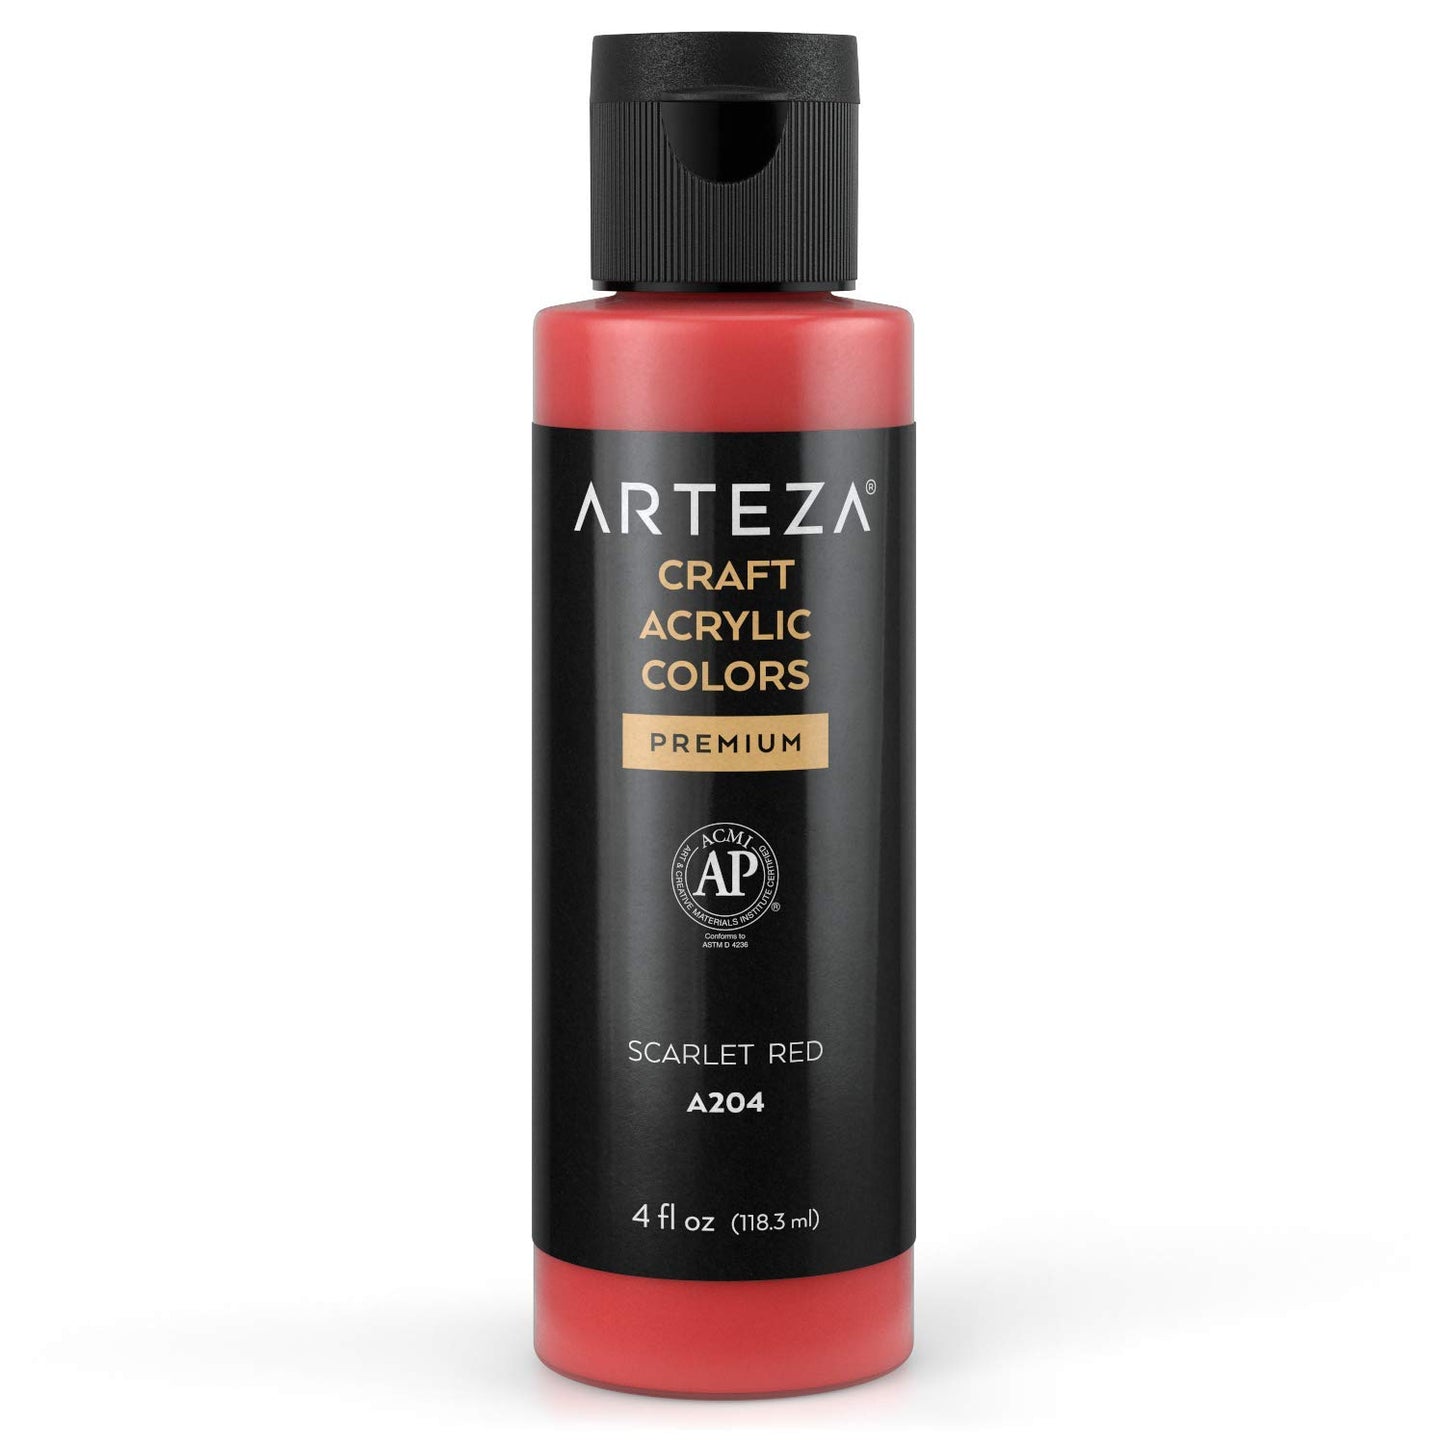 Arteza Craft Acrylic Paint, 4oz Bottle - A203 Scarlet Red